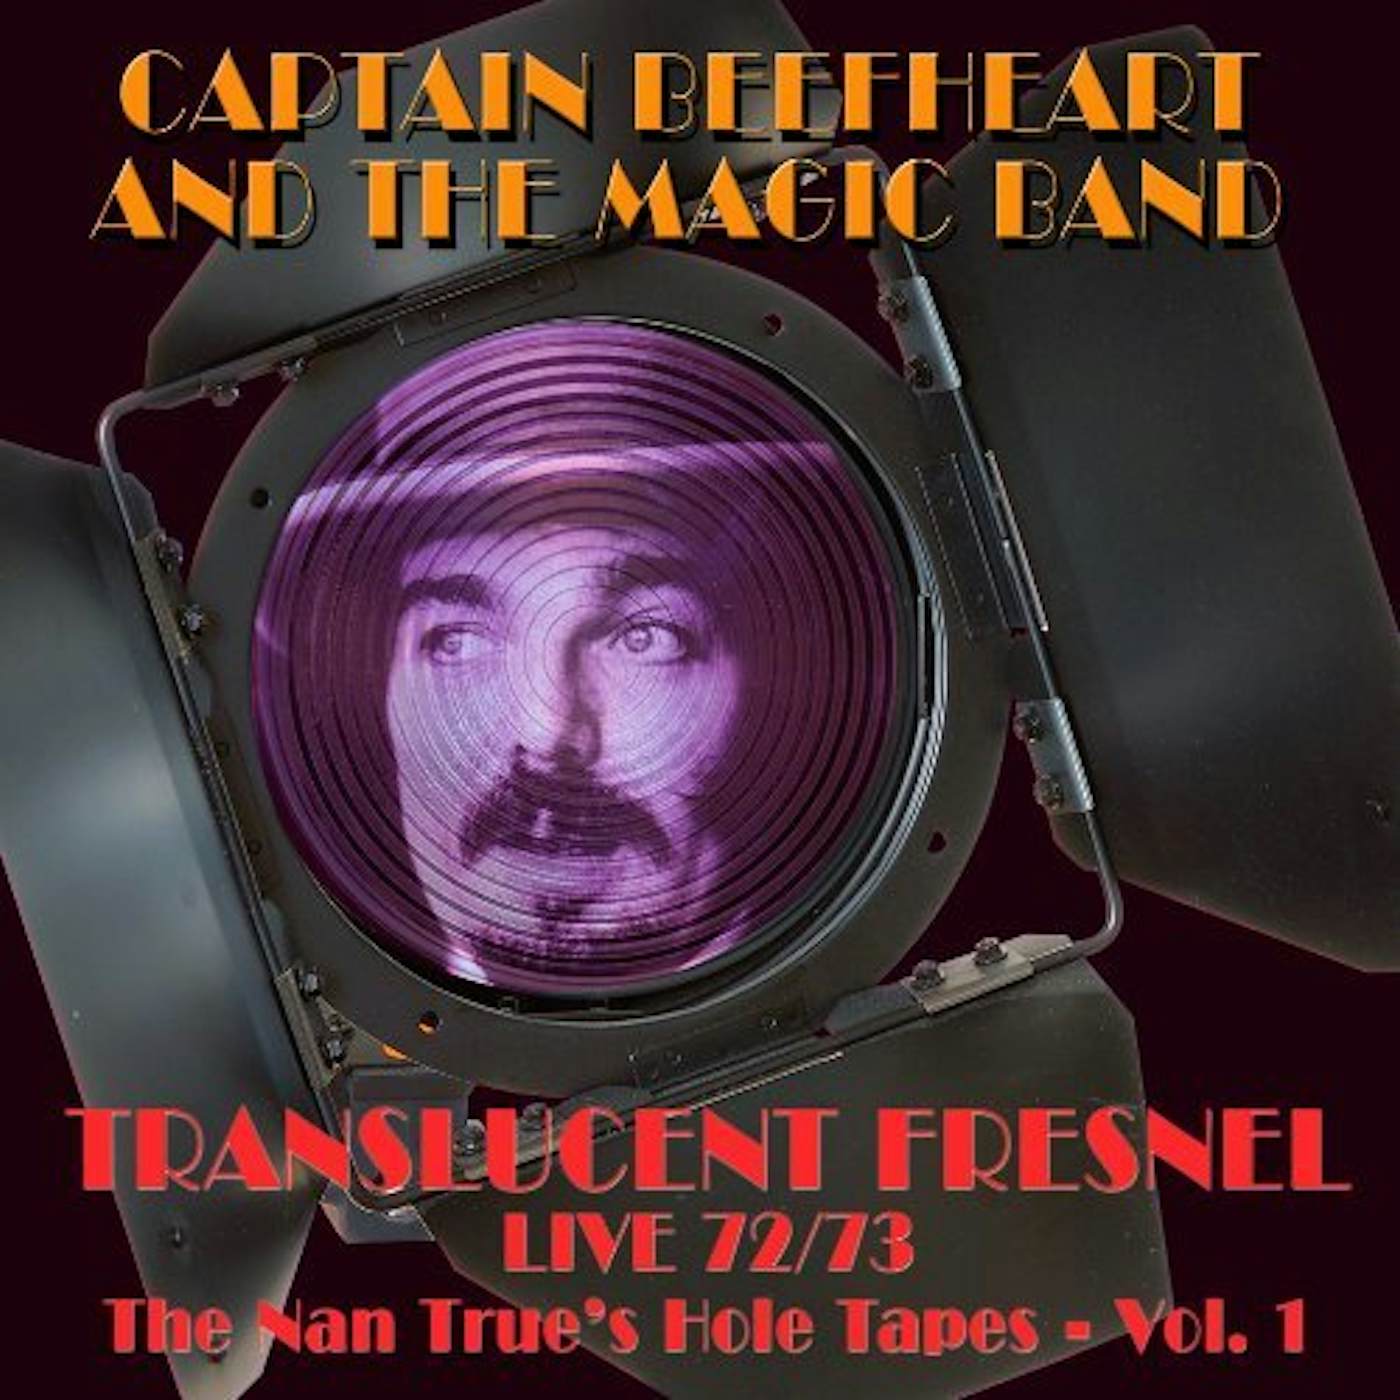 Captain Beefheart & His Magic Band TRANSLUCENT FRESNEL (NAN TRUESHOLE TAPE 72/73 LIVE CD